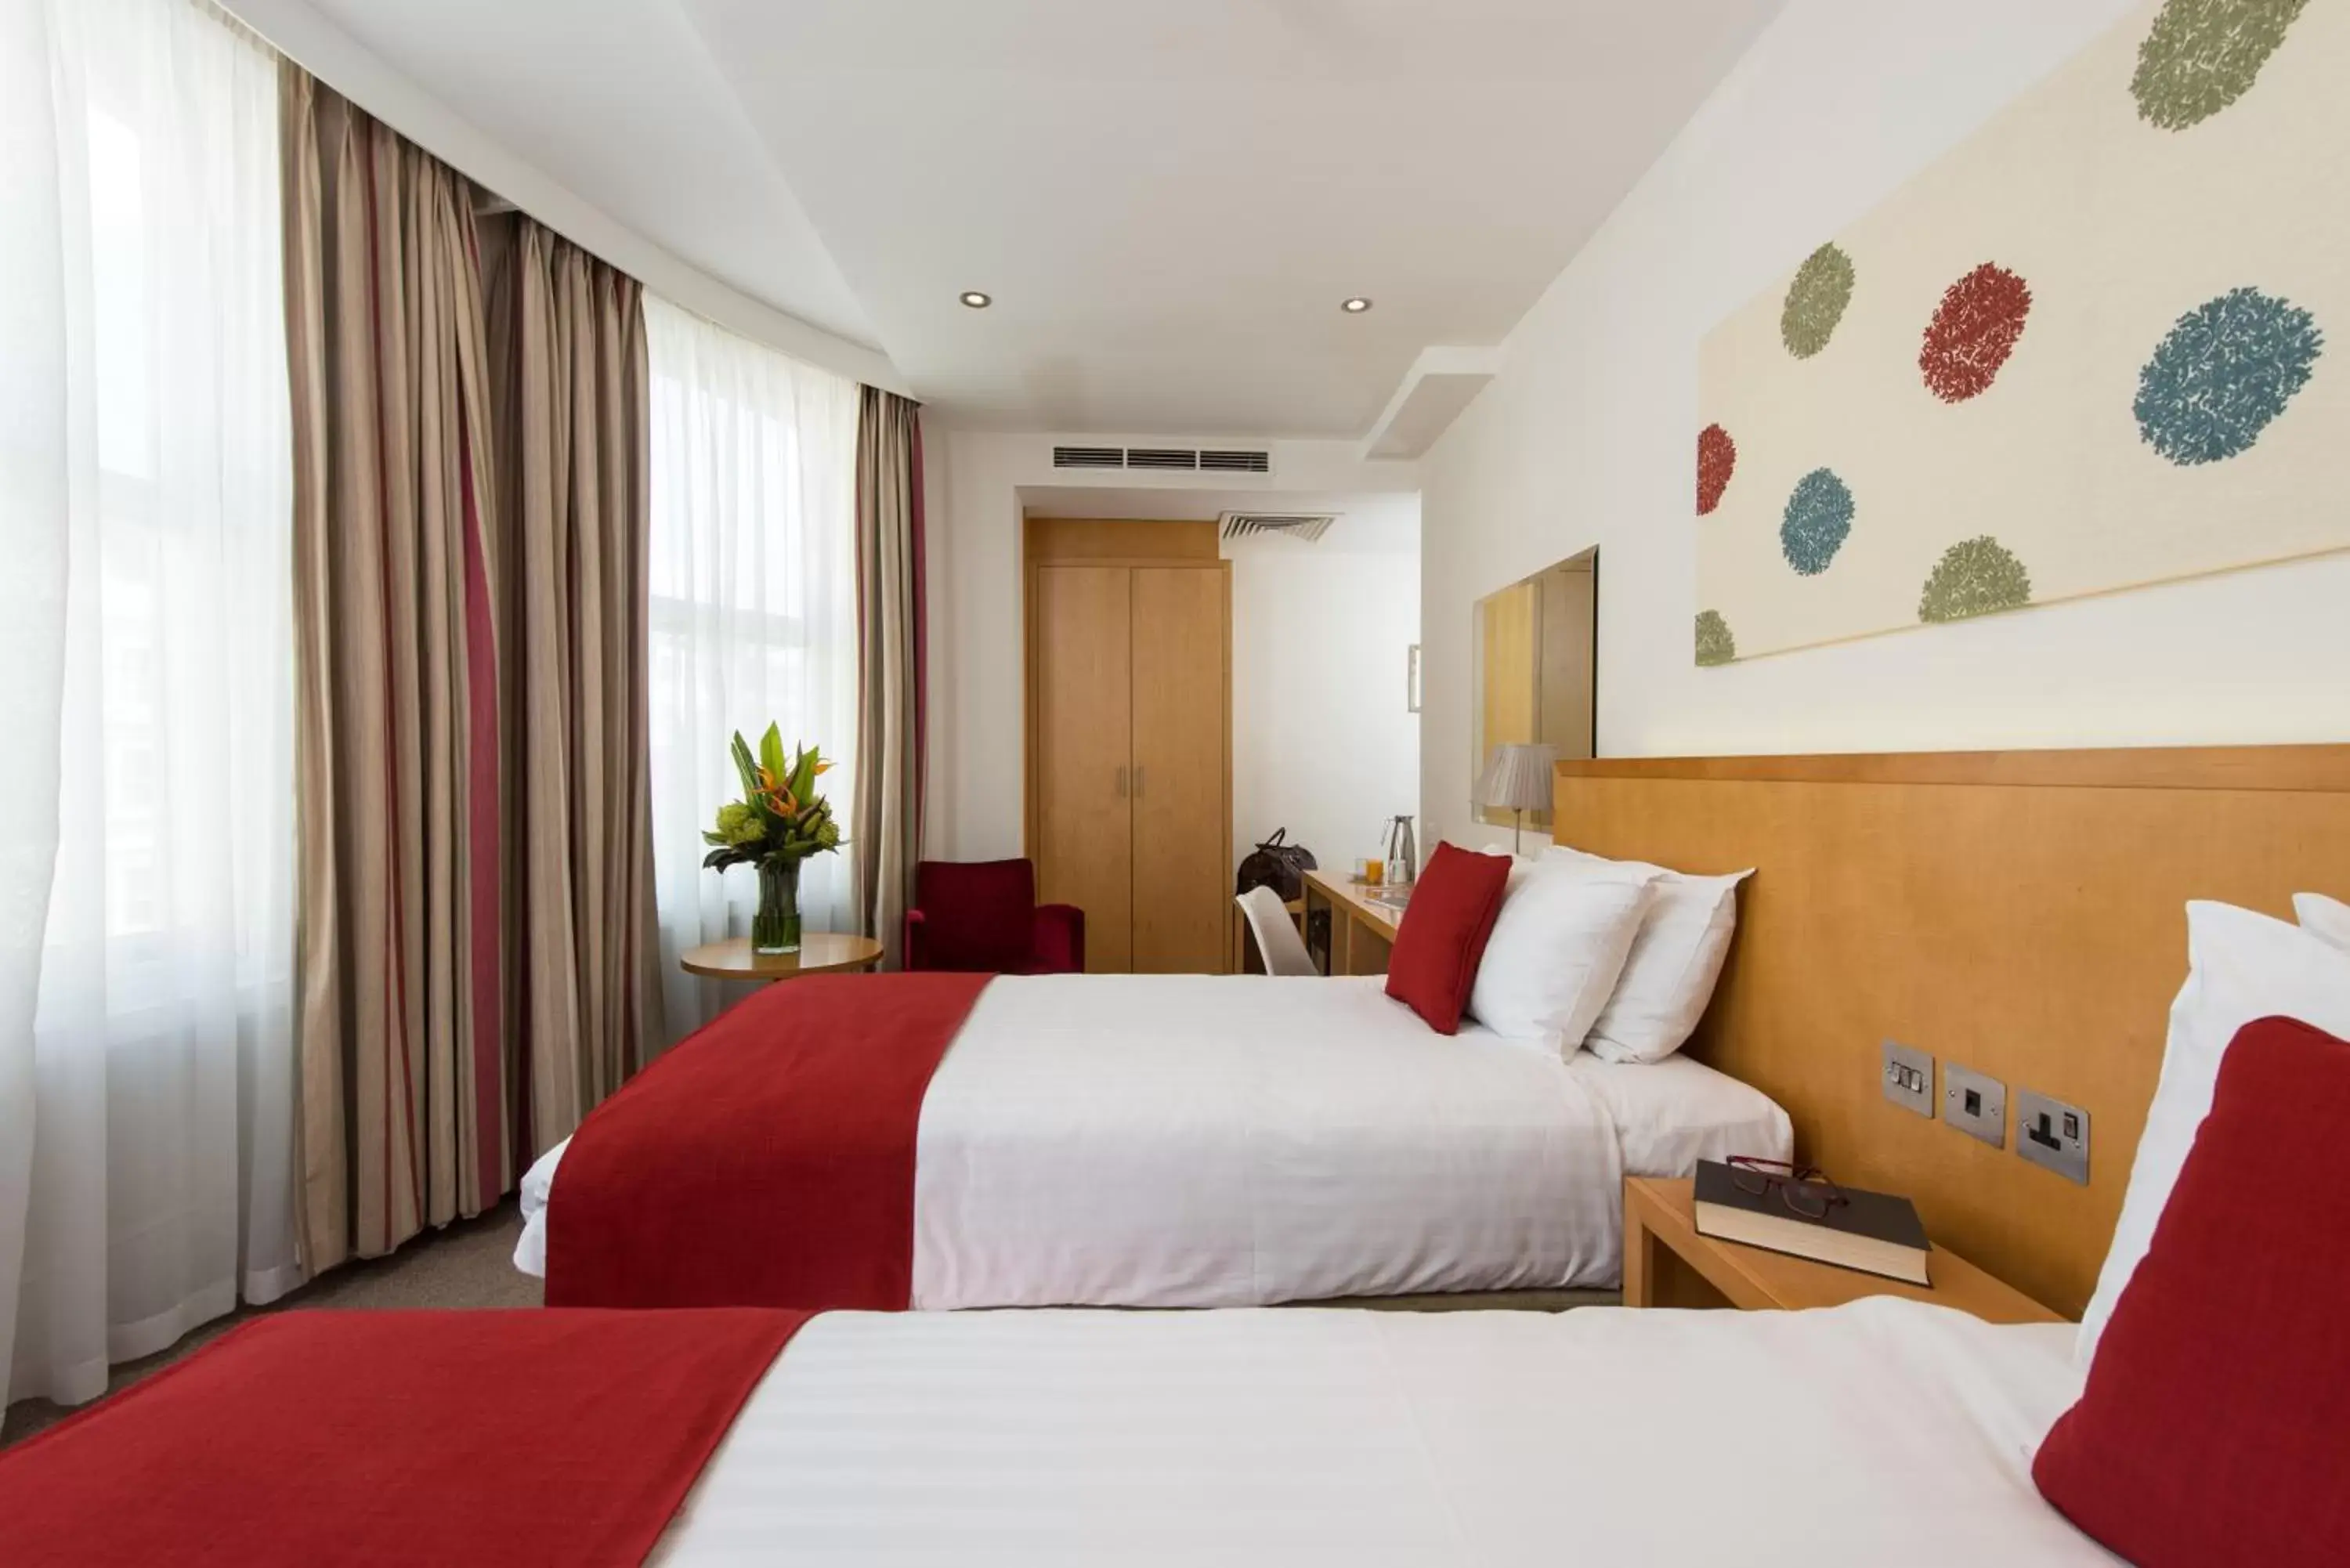 Bedroom, Room Photo in Park International Hotel